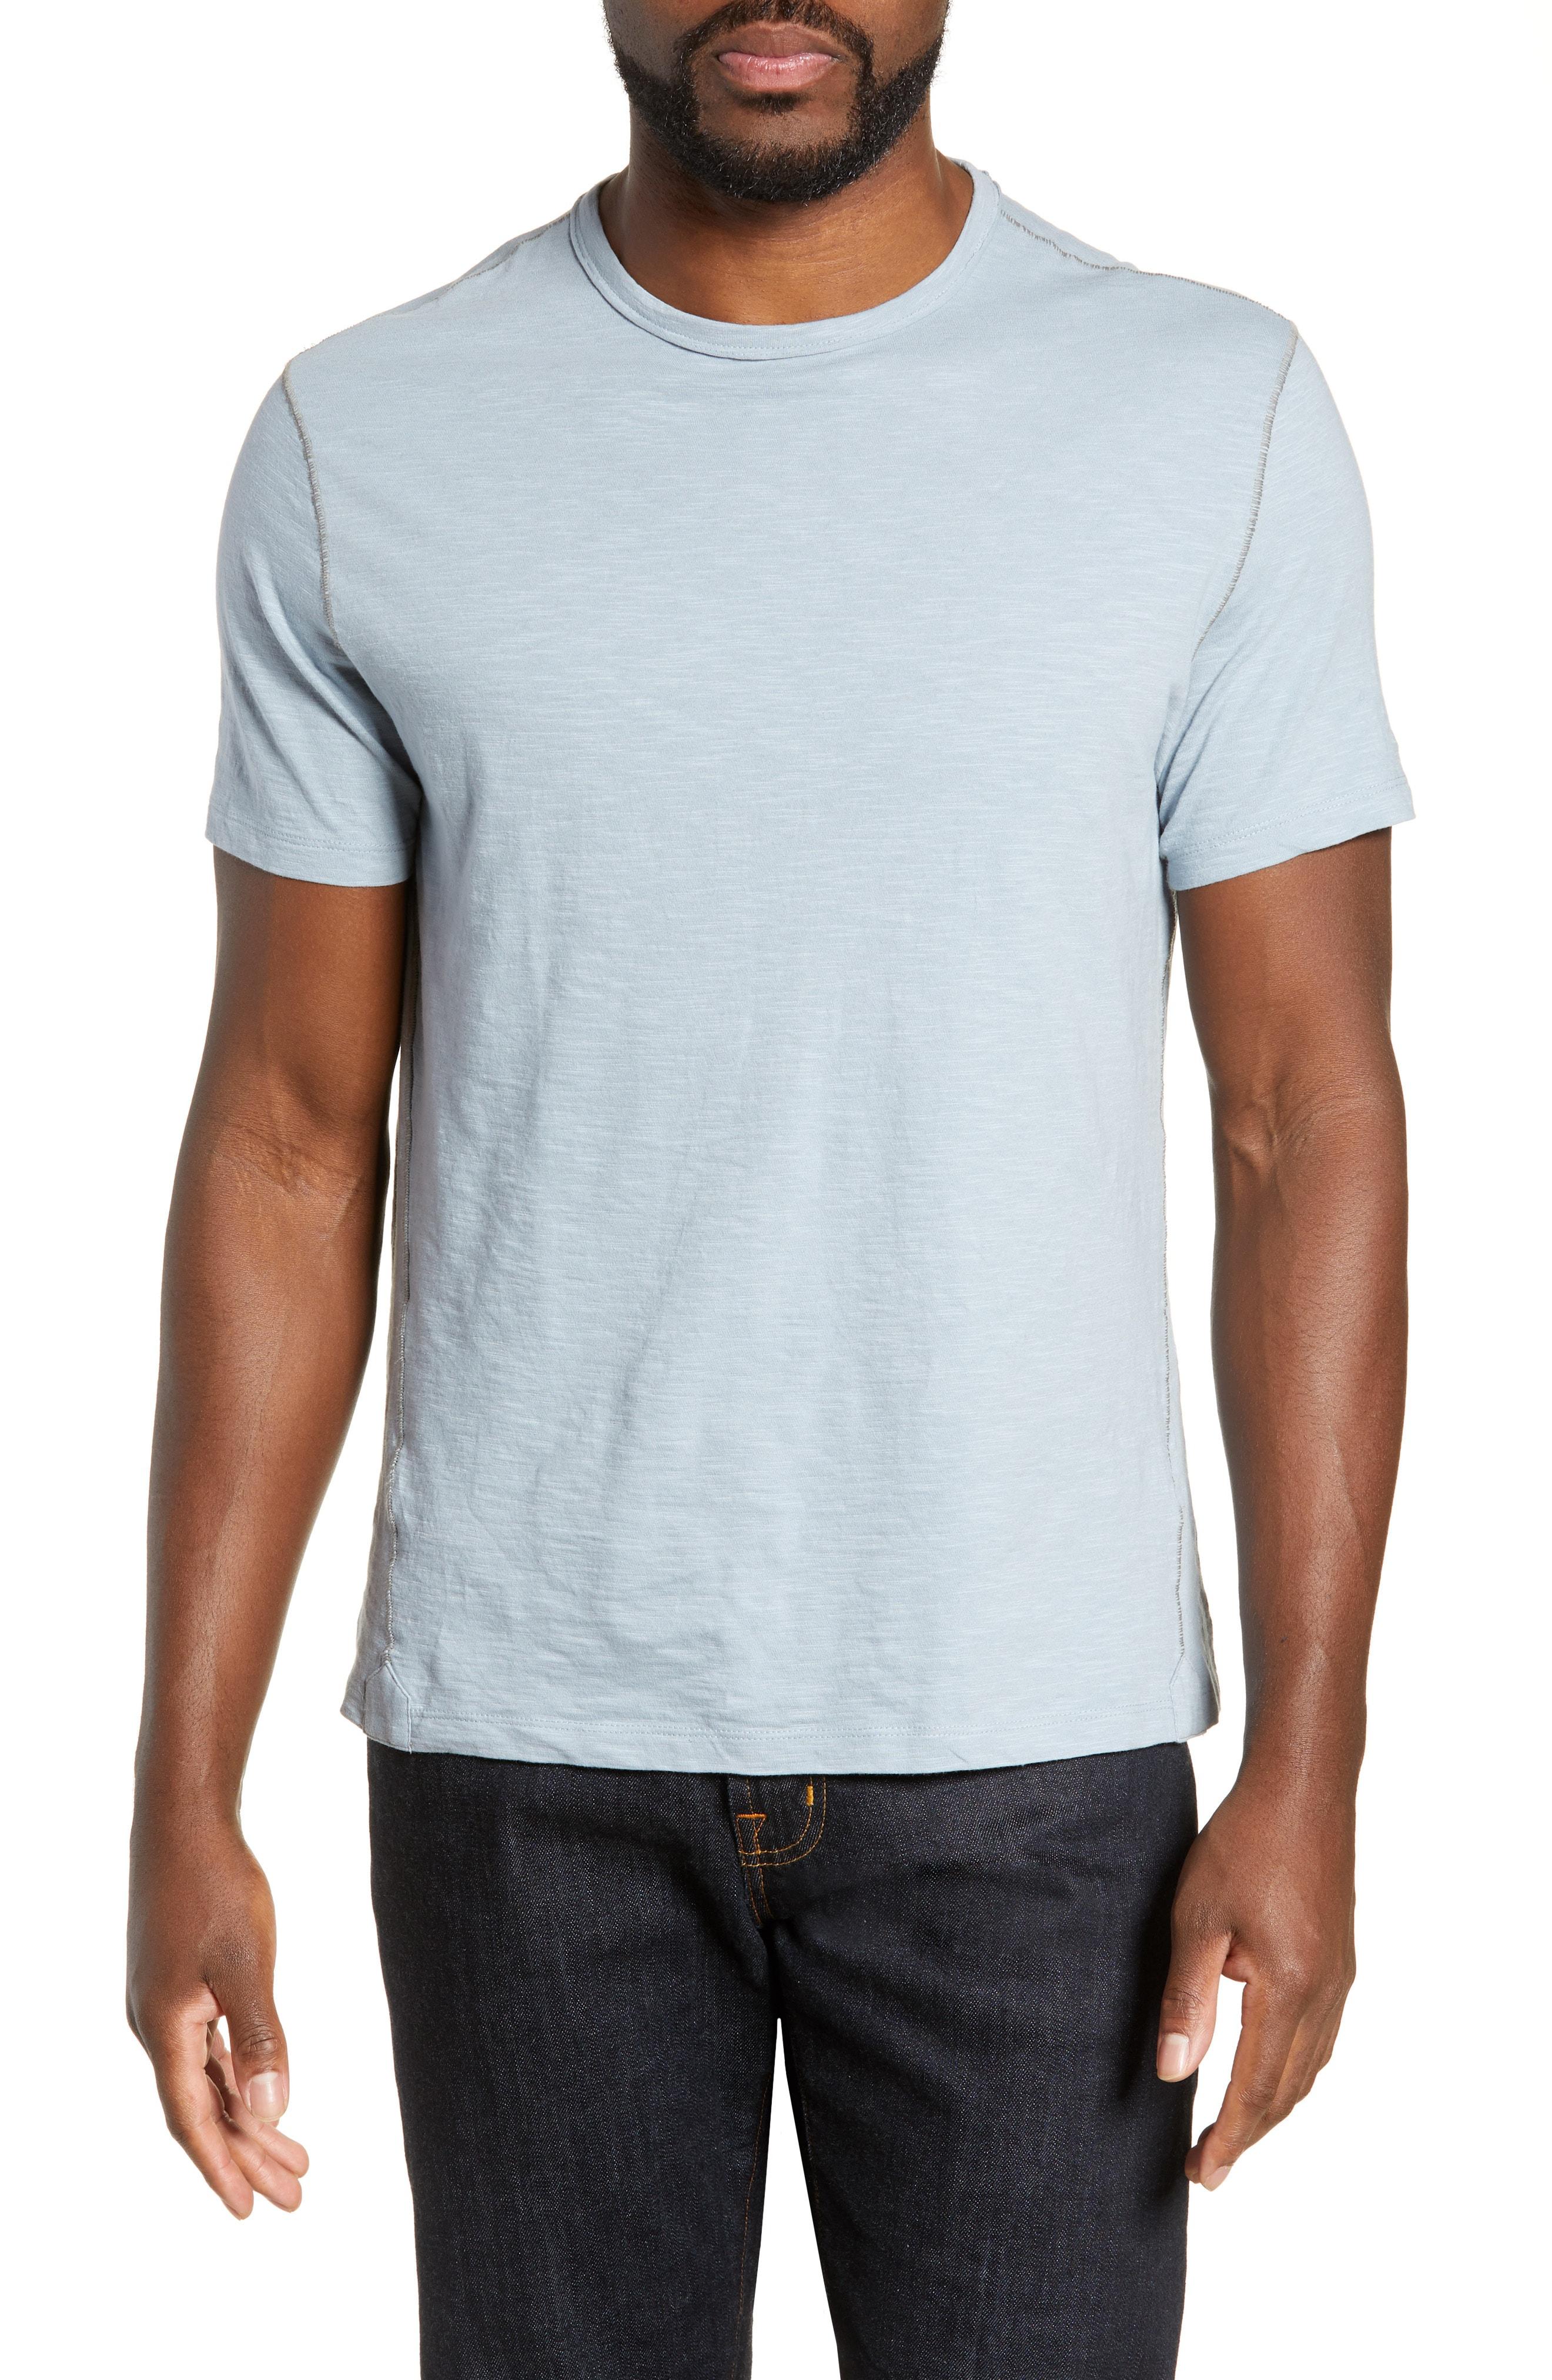 Lyst - Robert Barakett Kamloops Regular Fit T-shirt in Blue for Men